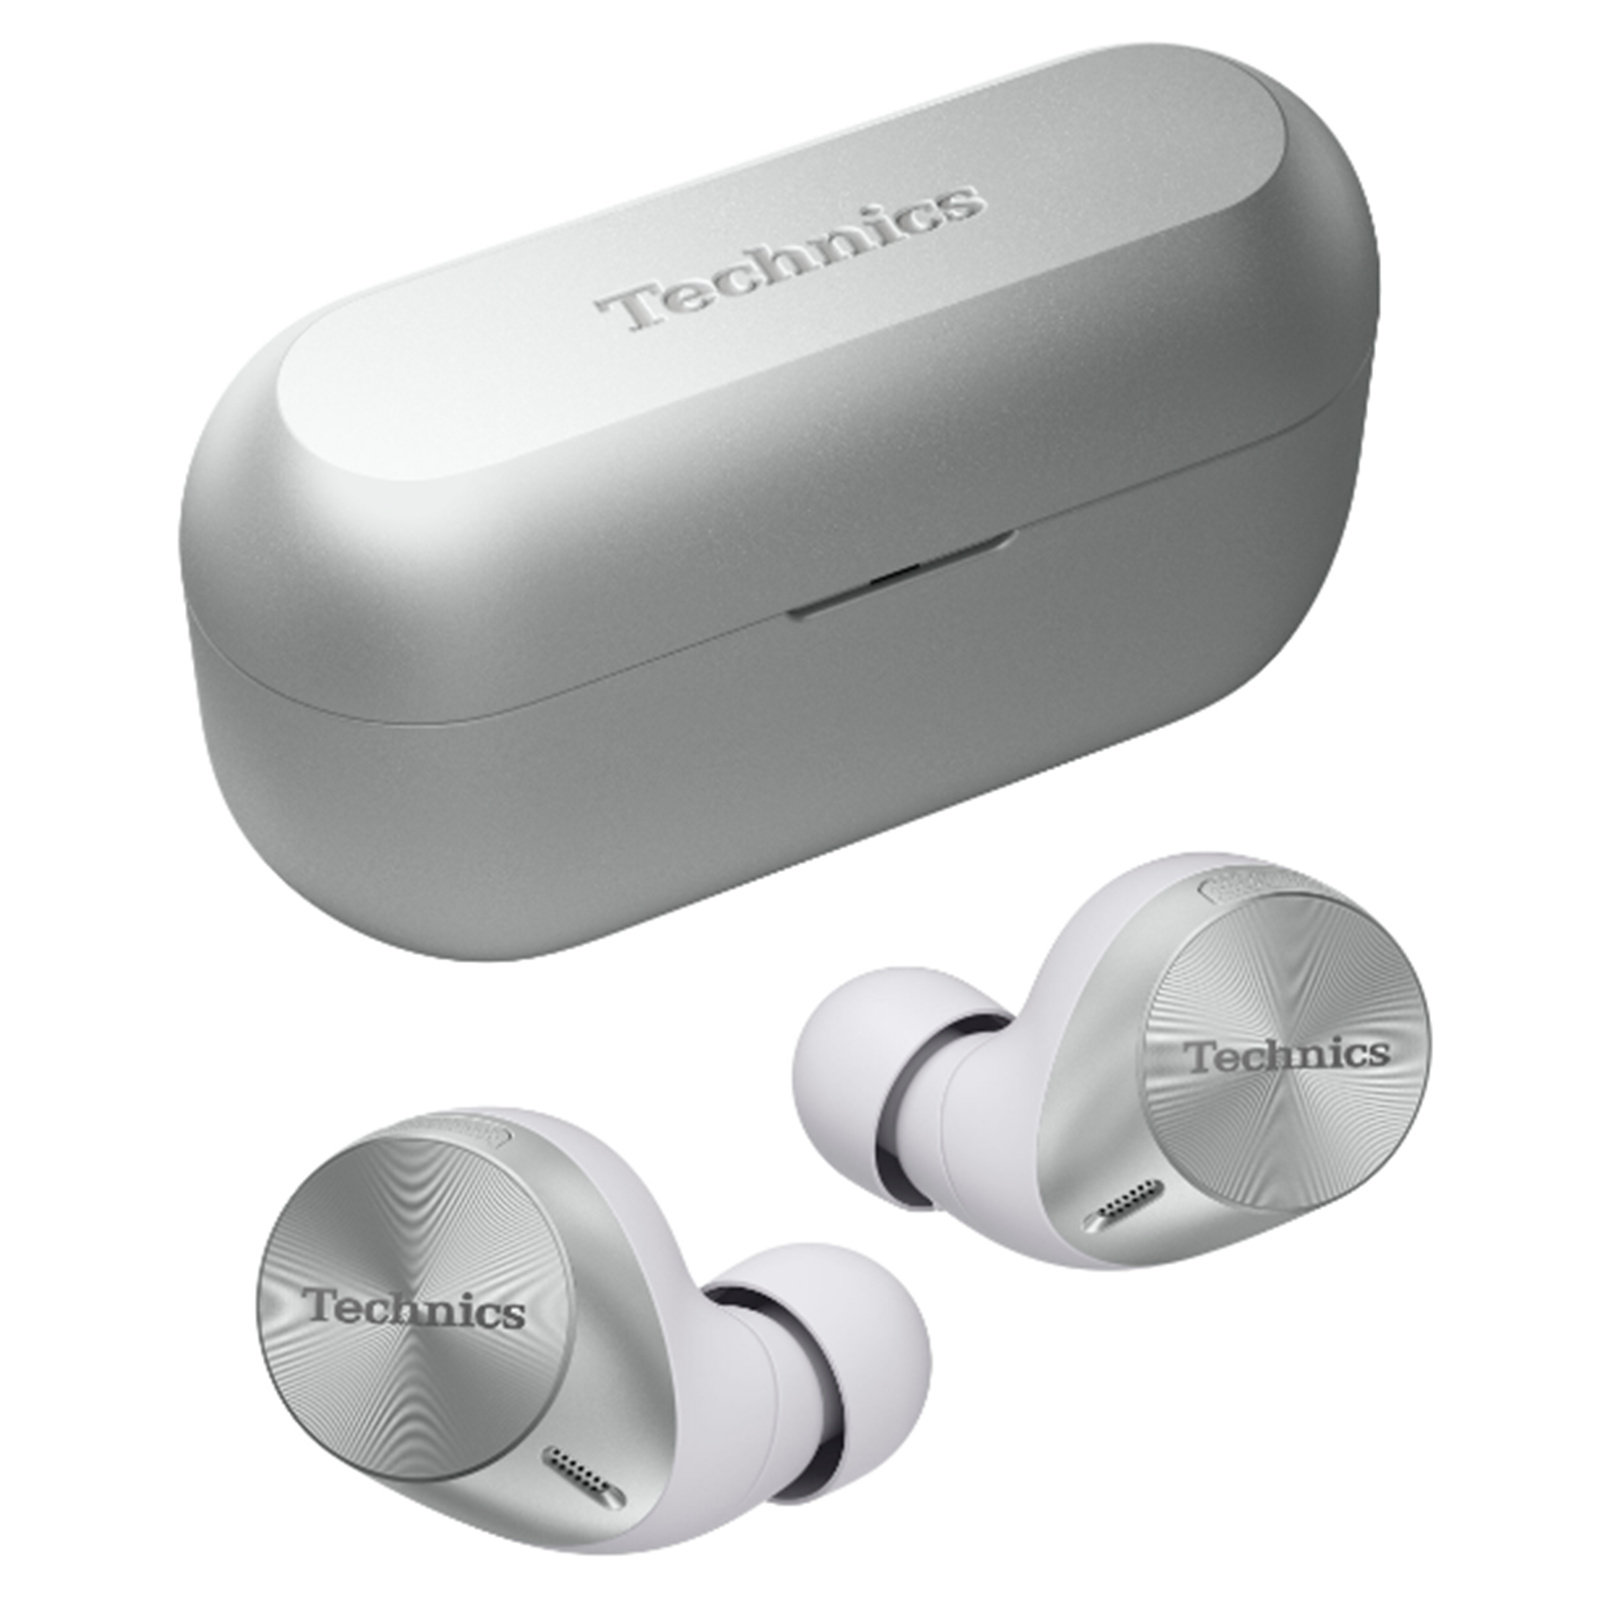 Technics AZ60 M2 (2023) Premium True Wireless Noise Cancelling In-Ear  Headphones - Silver HiFi sound with LDAC - Dual Hybrid ANC - JustMyVoice  crystal